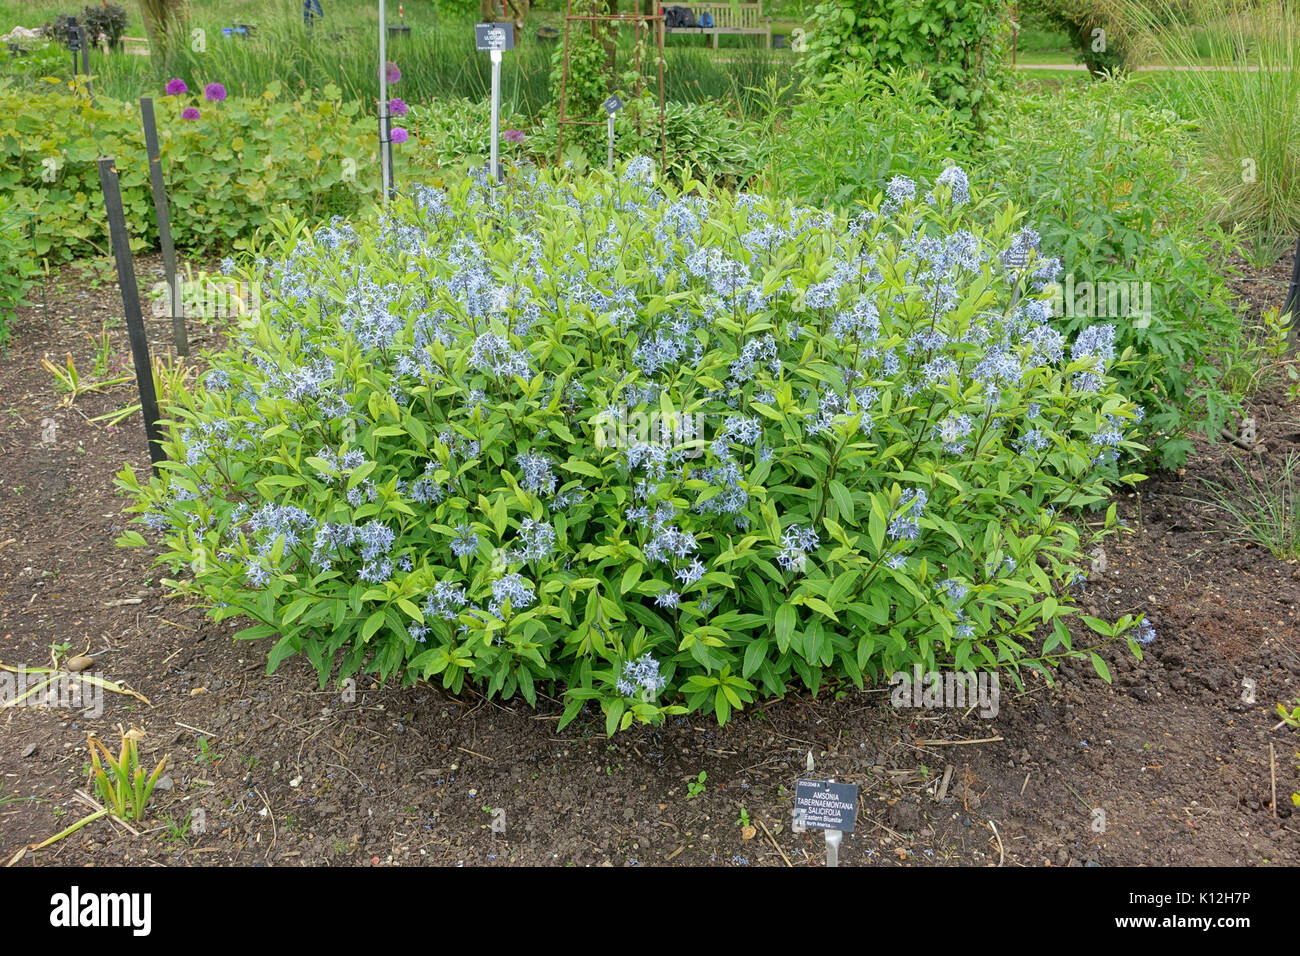 Amsonia tabernaemontana var. salicifolia   Hillier Gardens   Romsey, Hampshire, England   DSC04583 Stock Photo